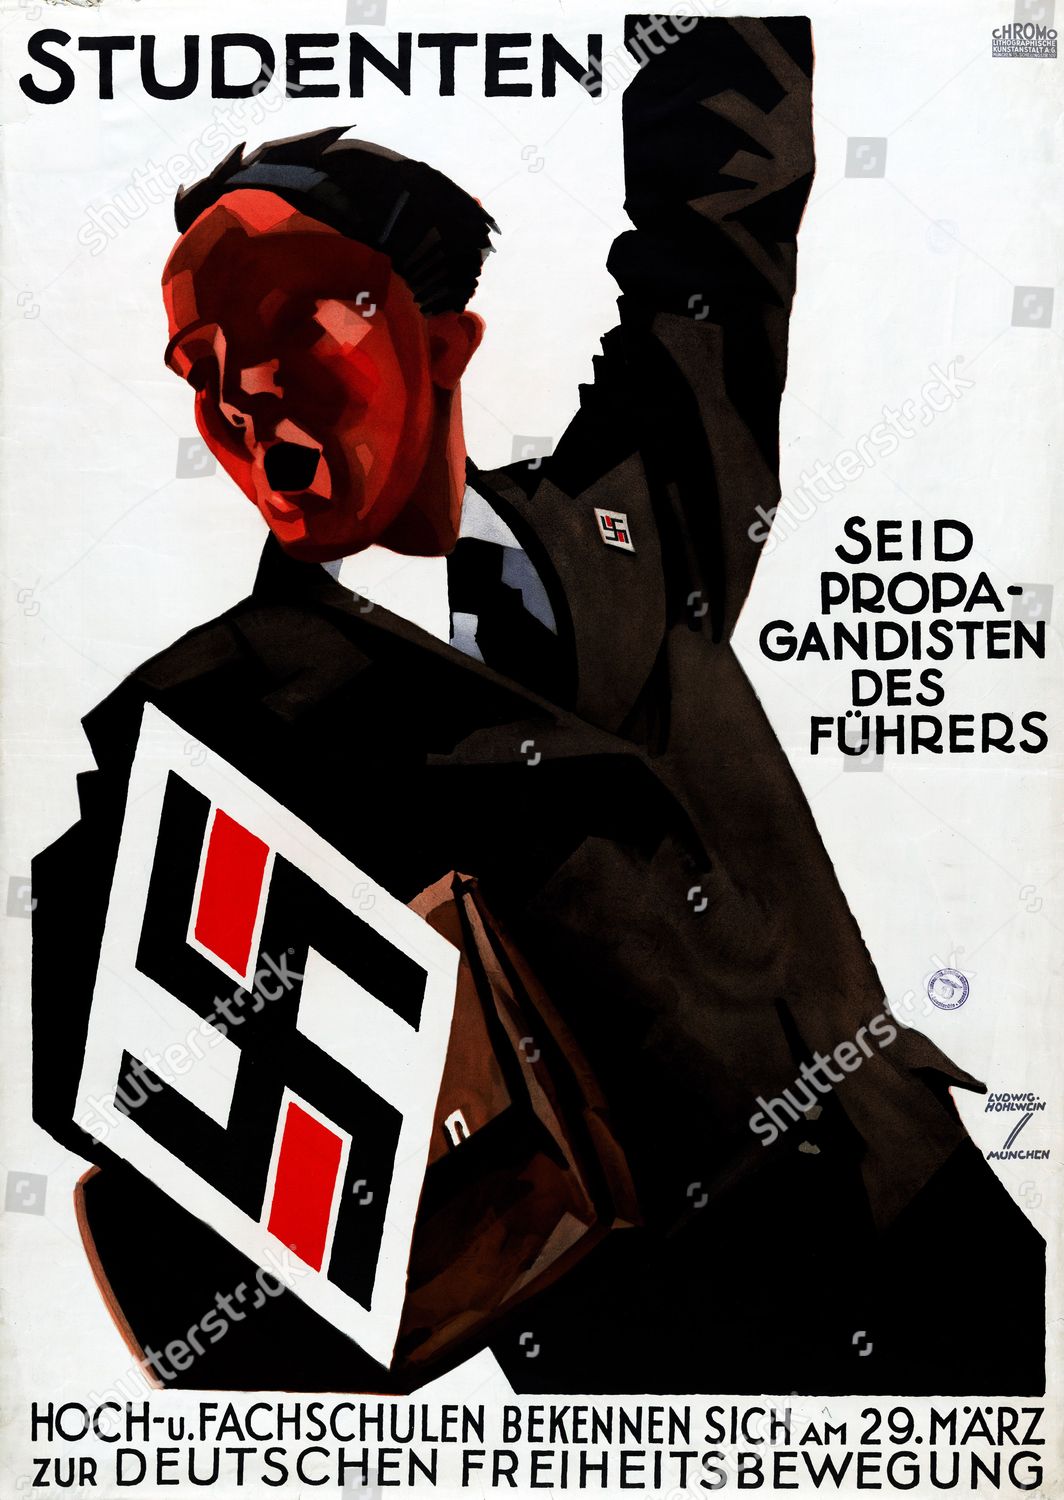 world war 2 german propaganda posters in english